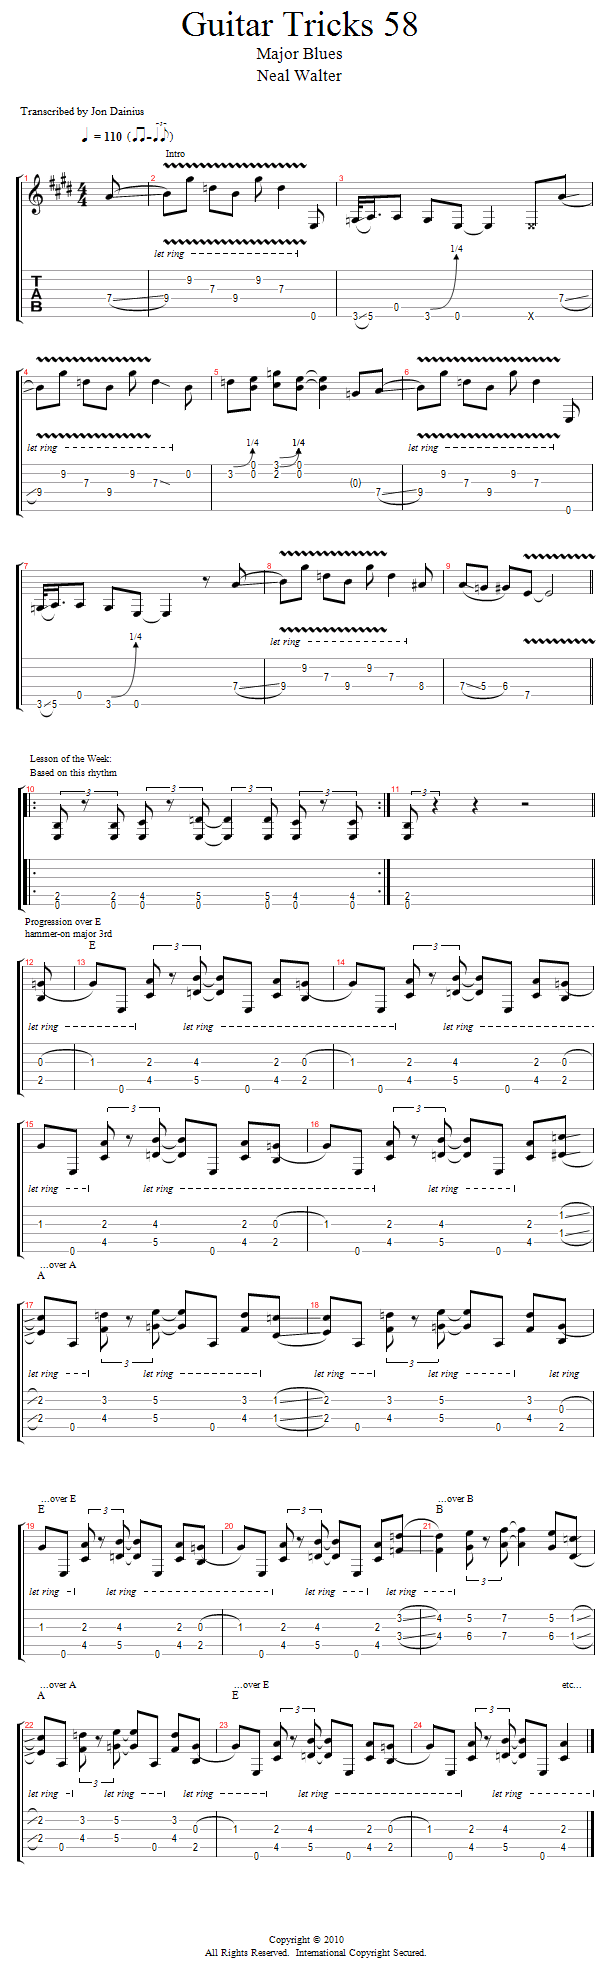 Guitar Tricks 58: Major Blues song notation